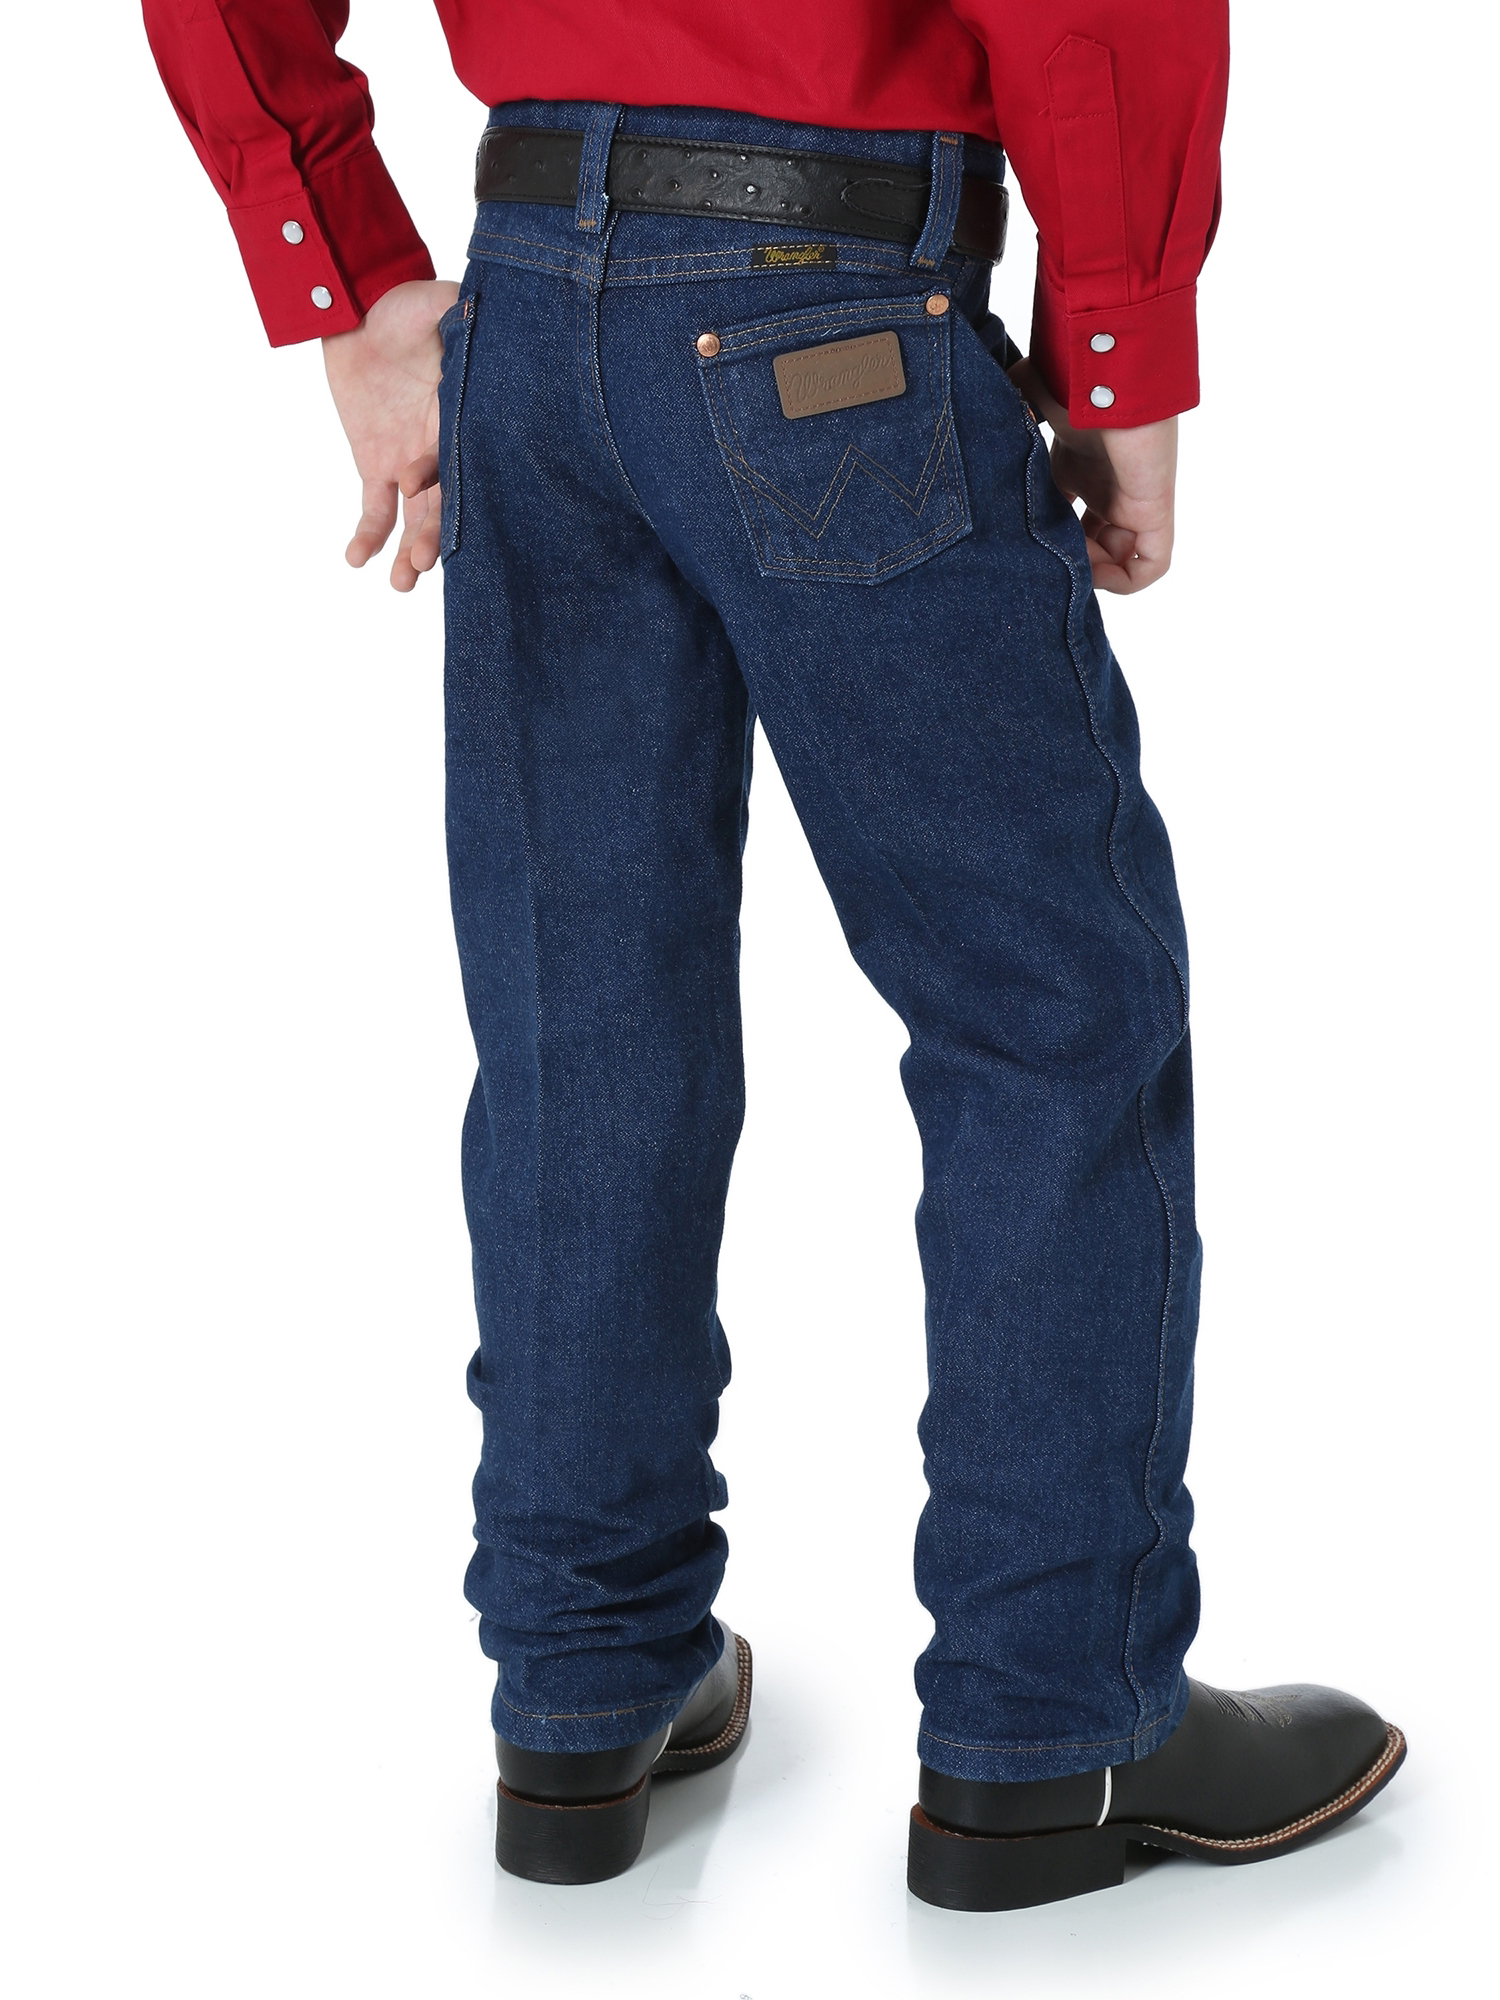 Wrangler Boys Cowboy Cut Original Fit Jeans, Sizes 4-7 - image 3 of 4